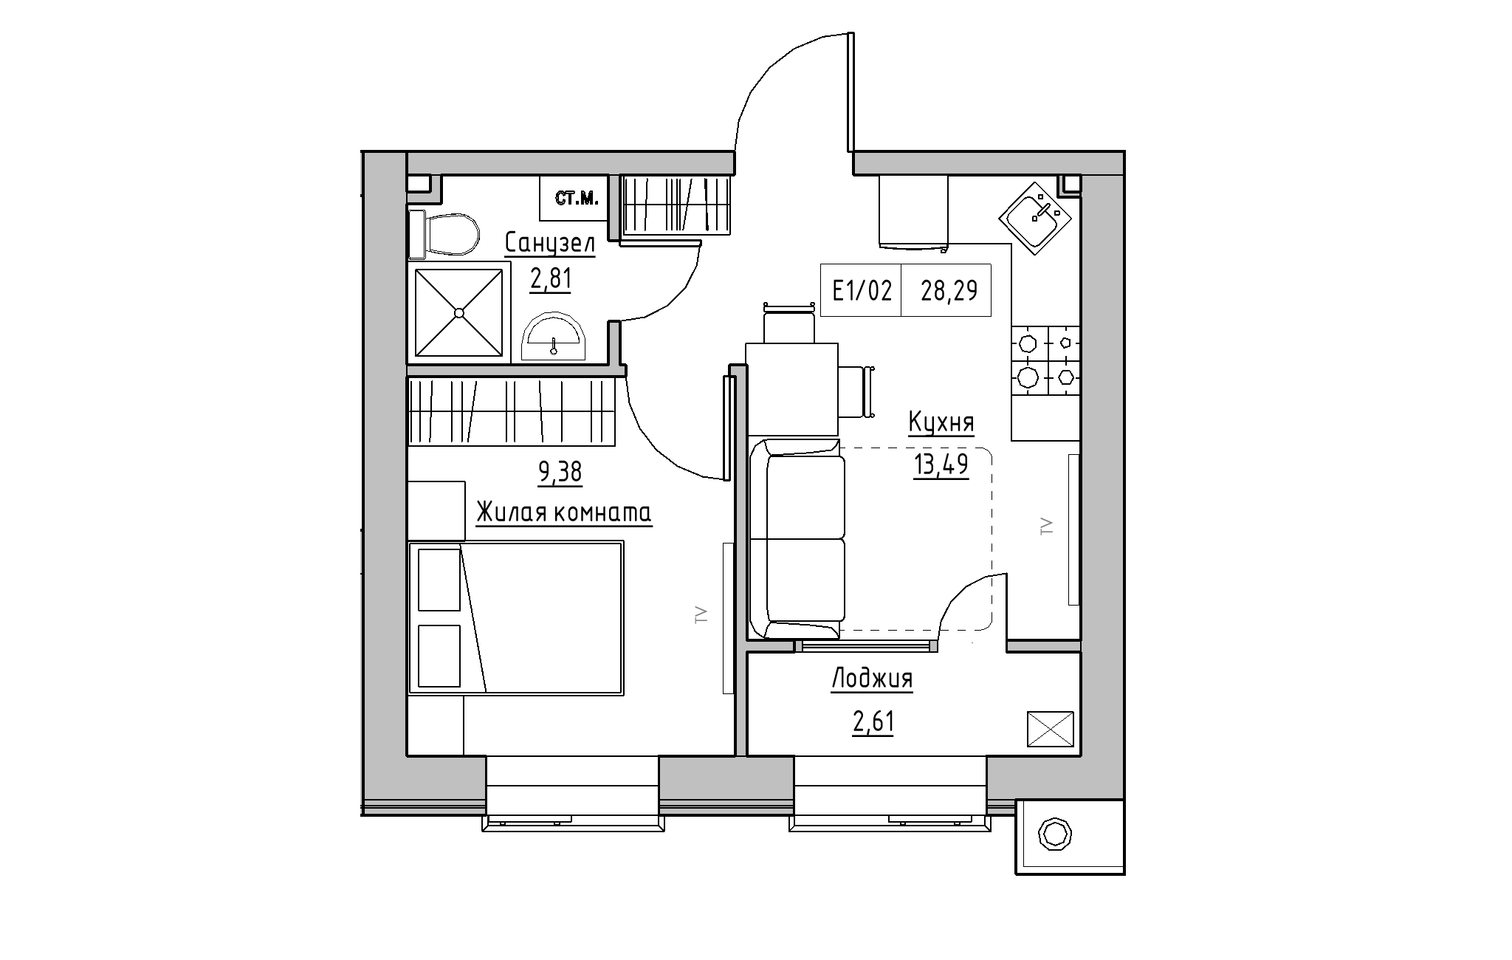 Planning 1-rm flats area 28.29m2, KS-013-05/0016.